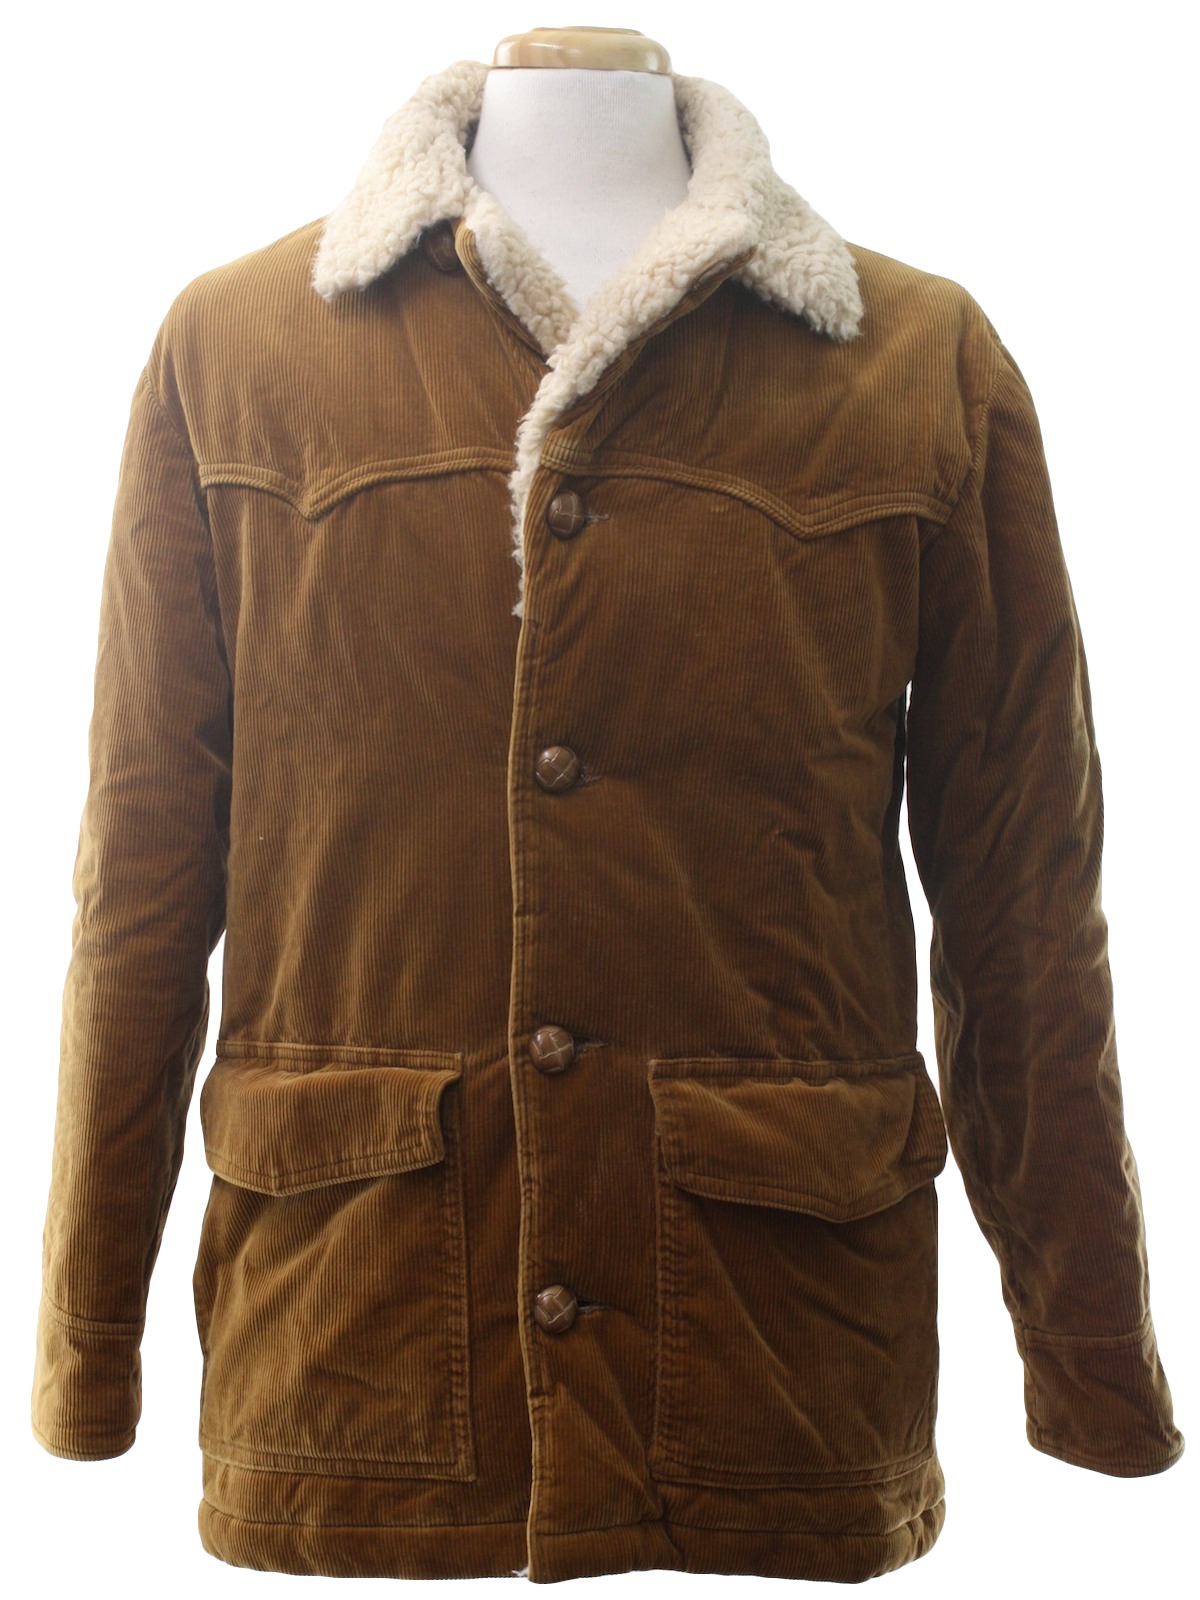 Weathercaster 70's Vintage Jacket: 70s -Weathercaster- Mens golden ...